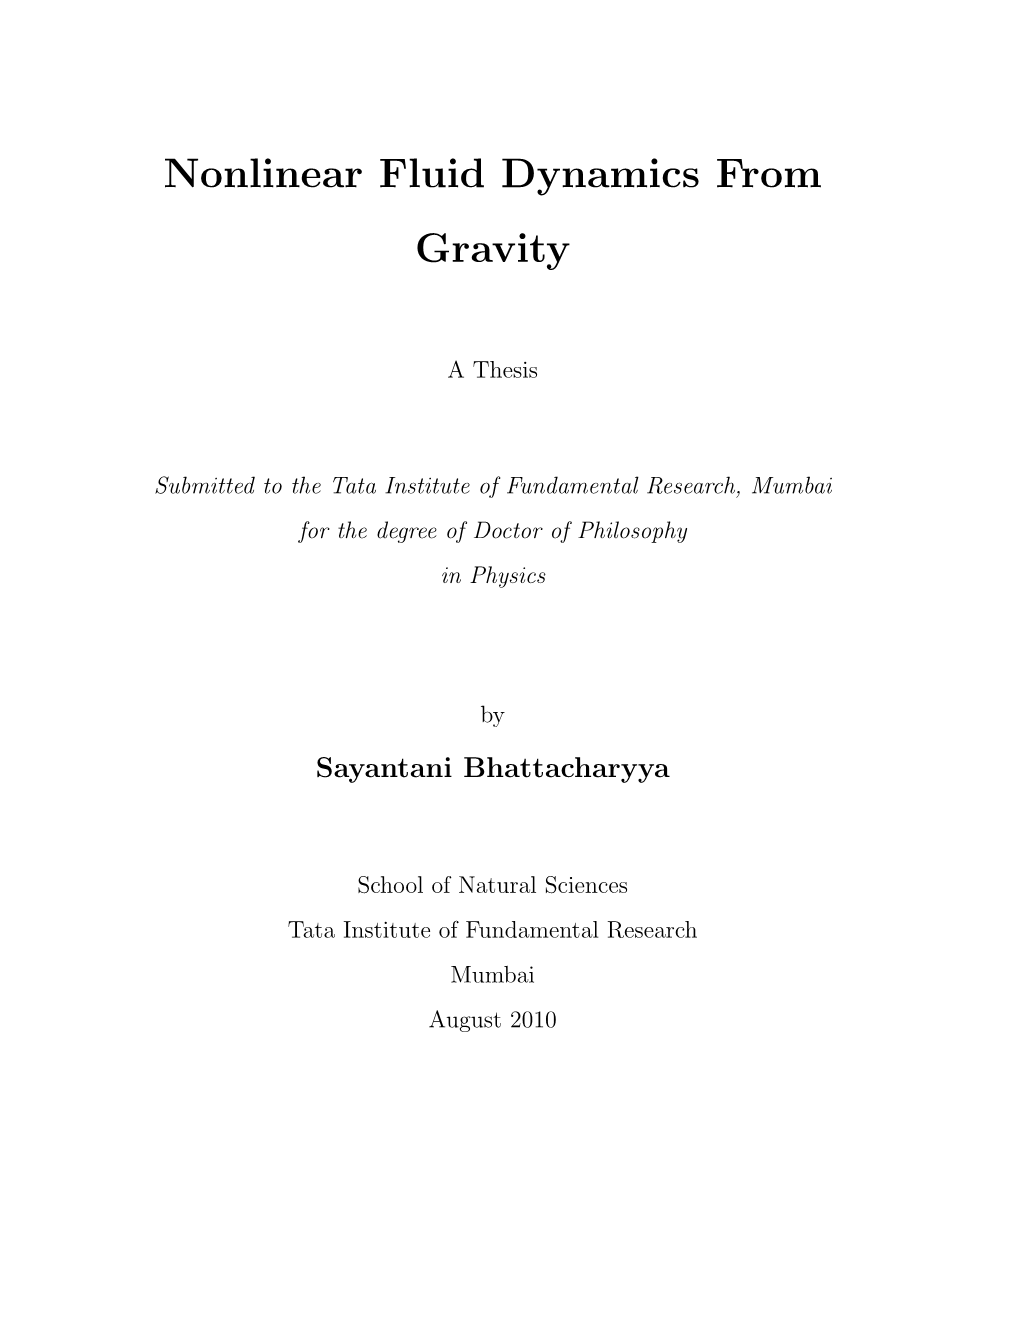 Nonlinear Fluid Dynamics from Gravity